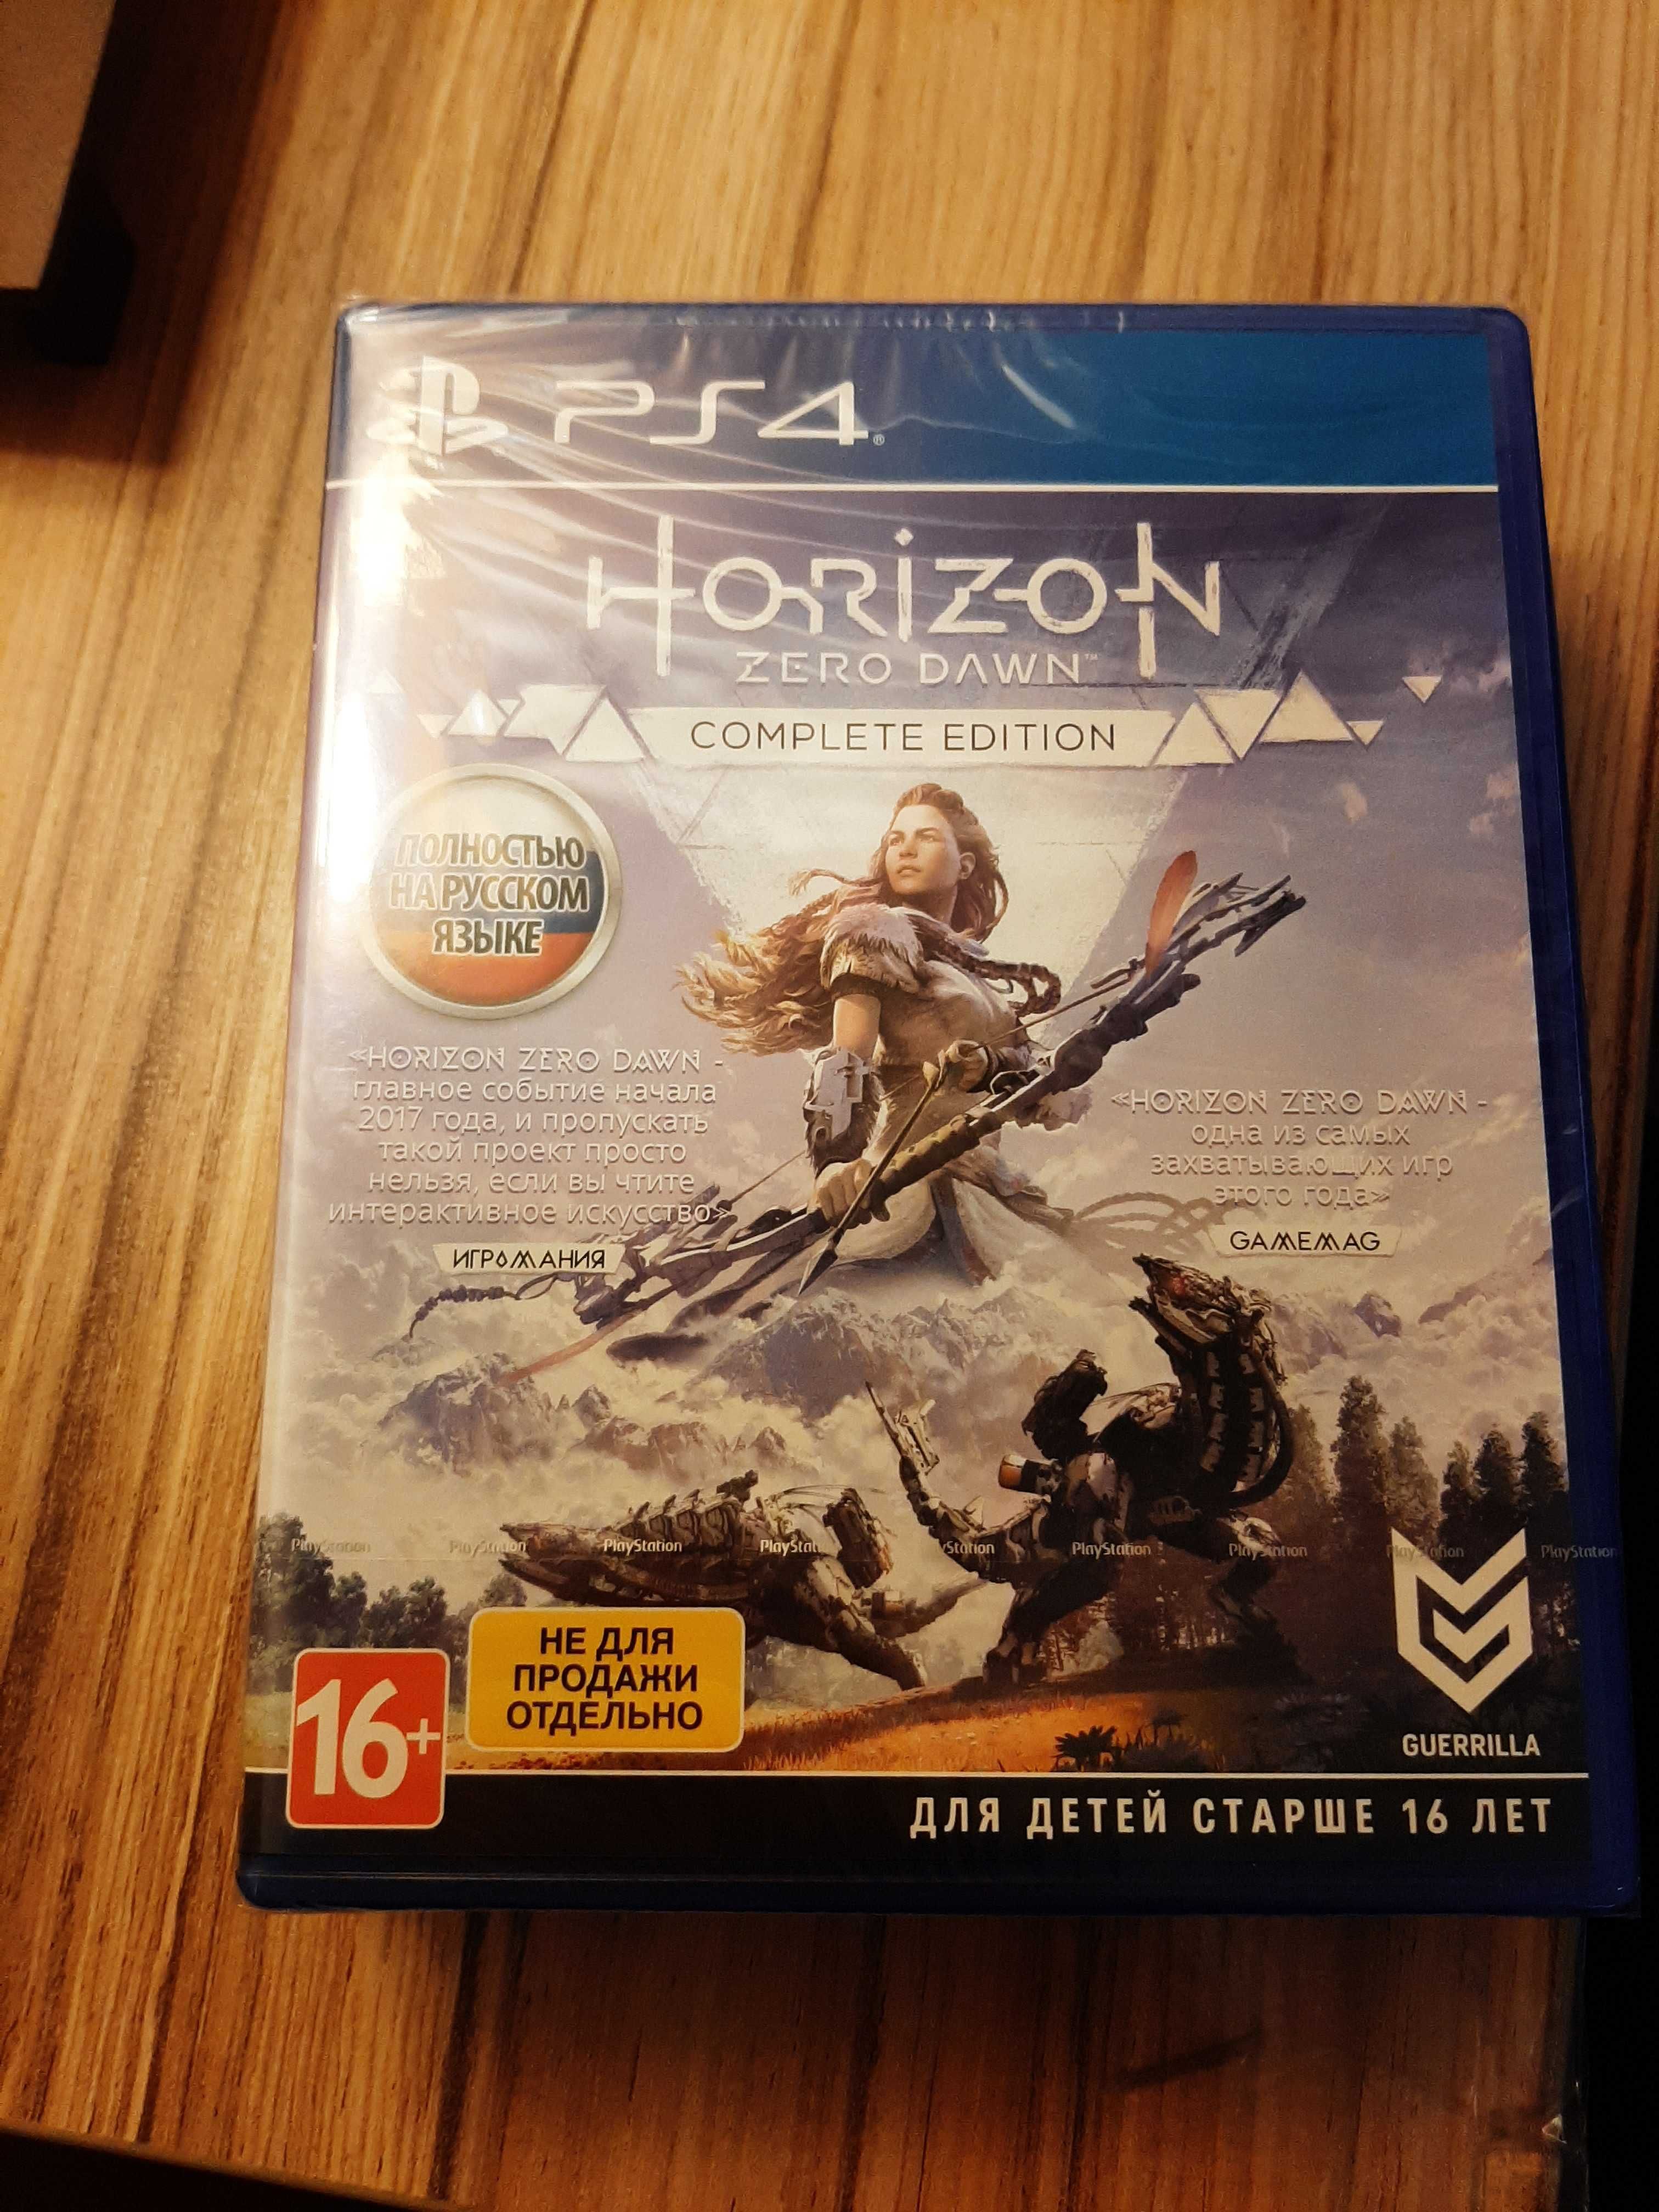 PlayStation 4 Horizon Zero Dawn